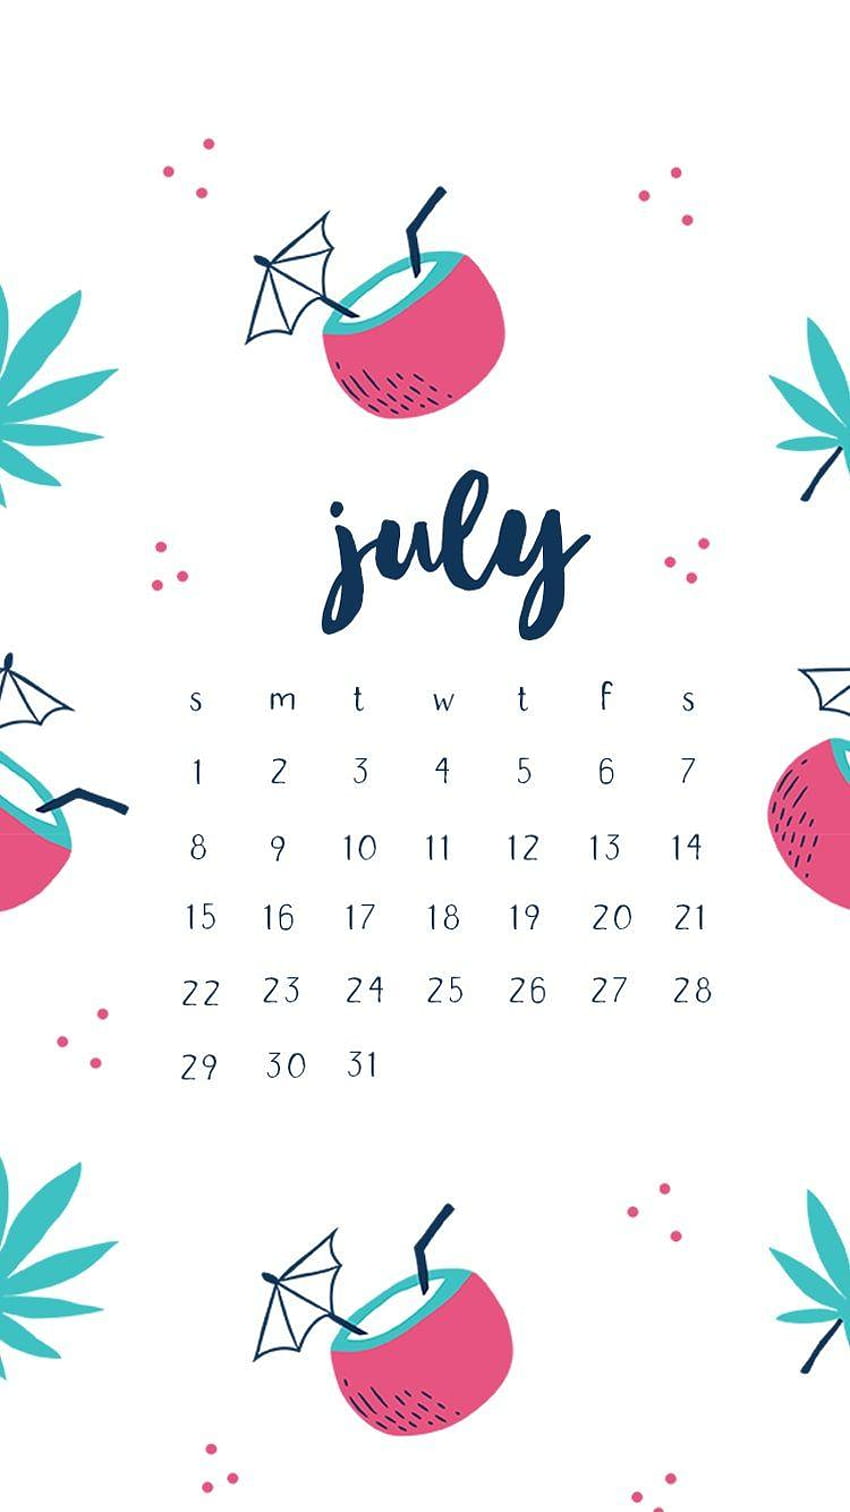 Hello July 2018 iPhone Calendar, july 2018 calendar HD phone wallpaper